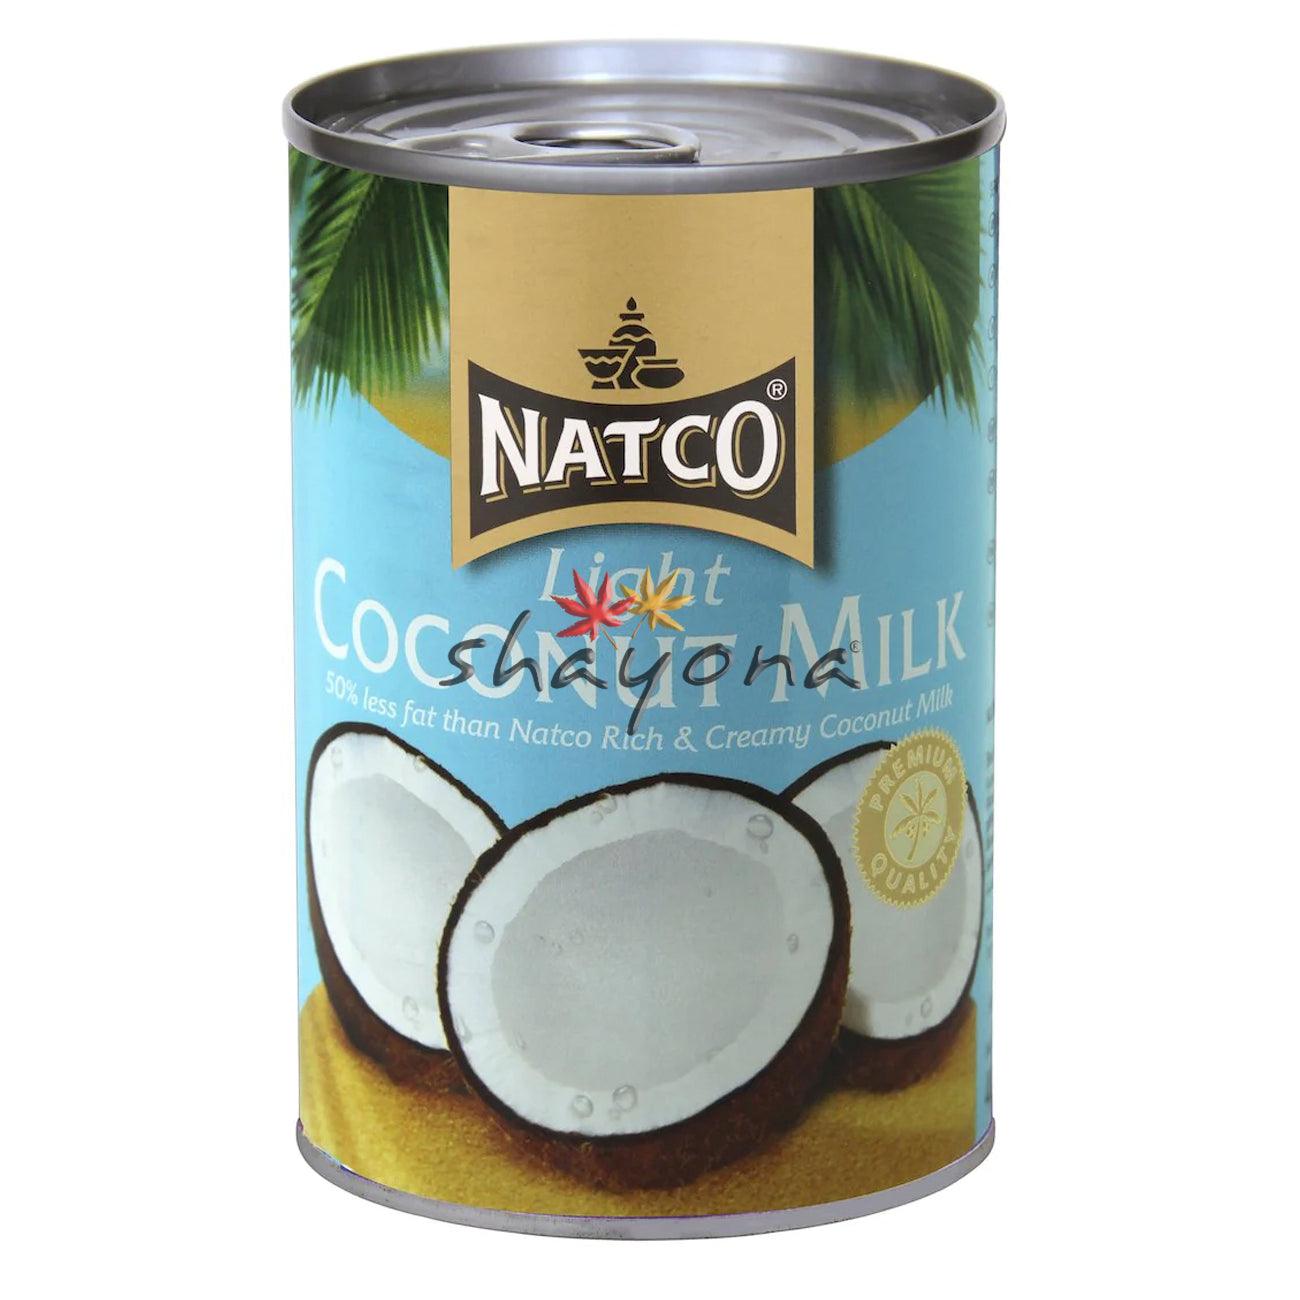 Natco Light Coconut Milk - Shayona UK